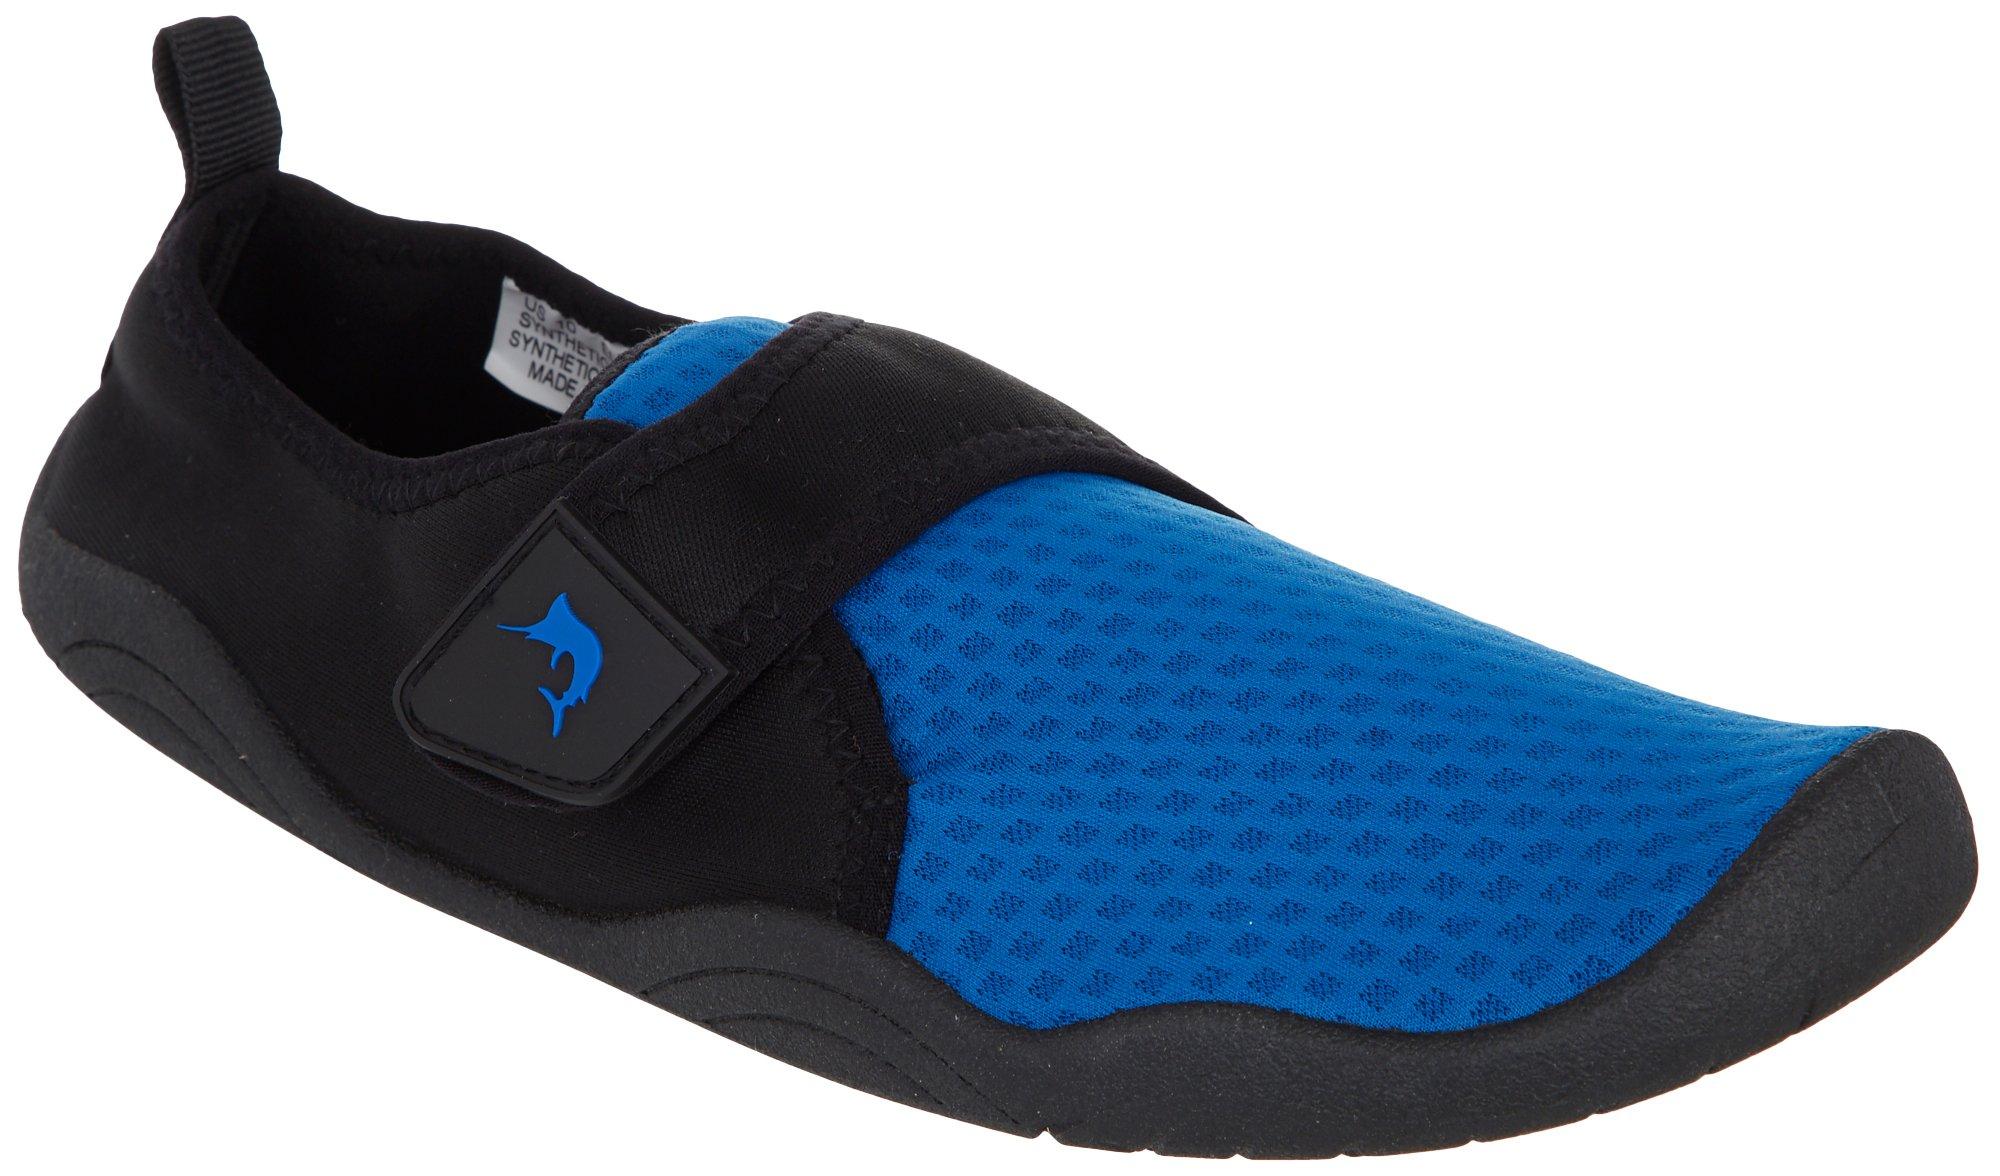 Men's Bluefish Water Shoes